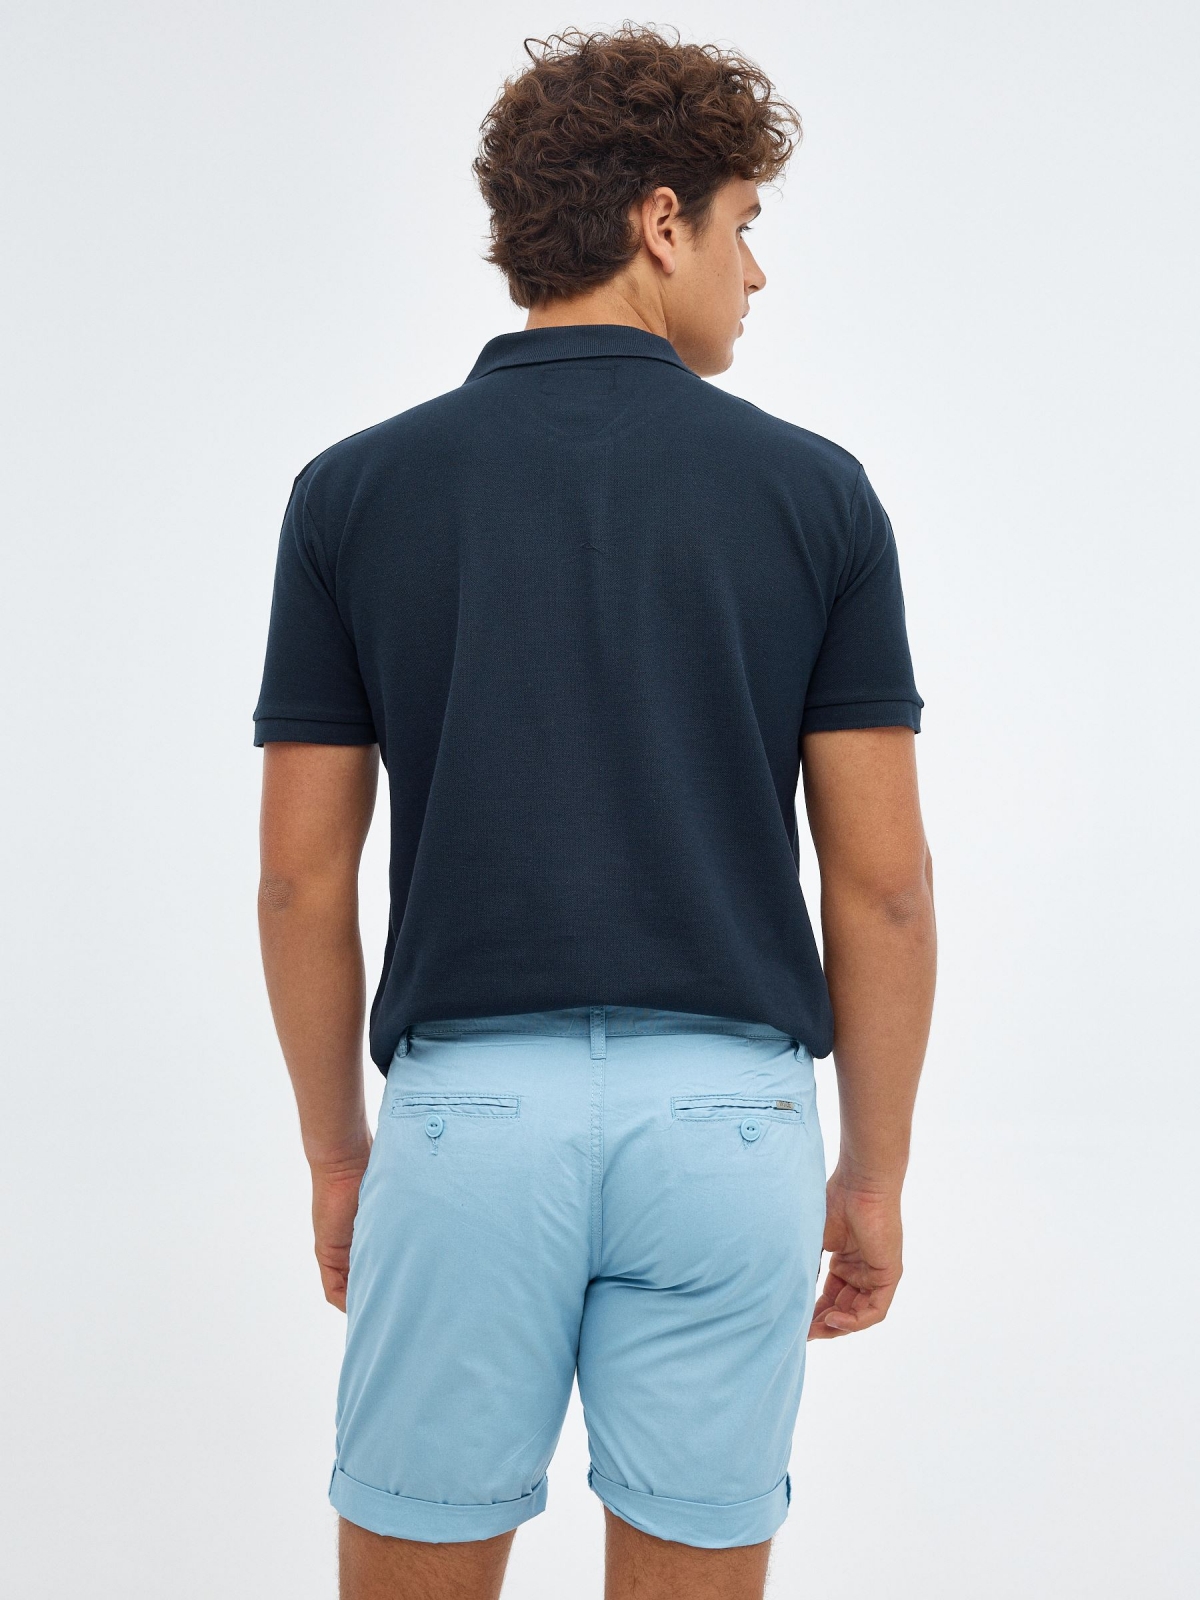 Poplin shorts light blue middle back view